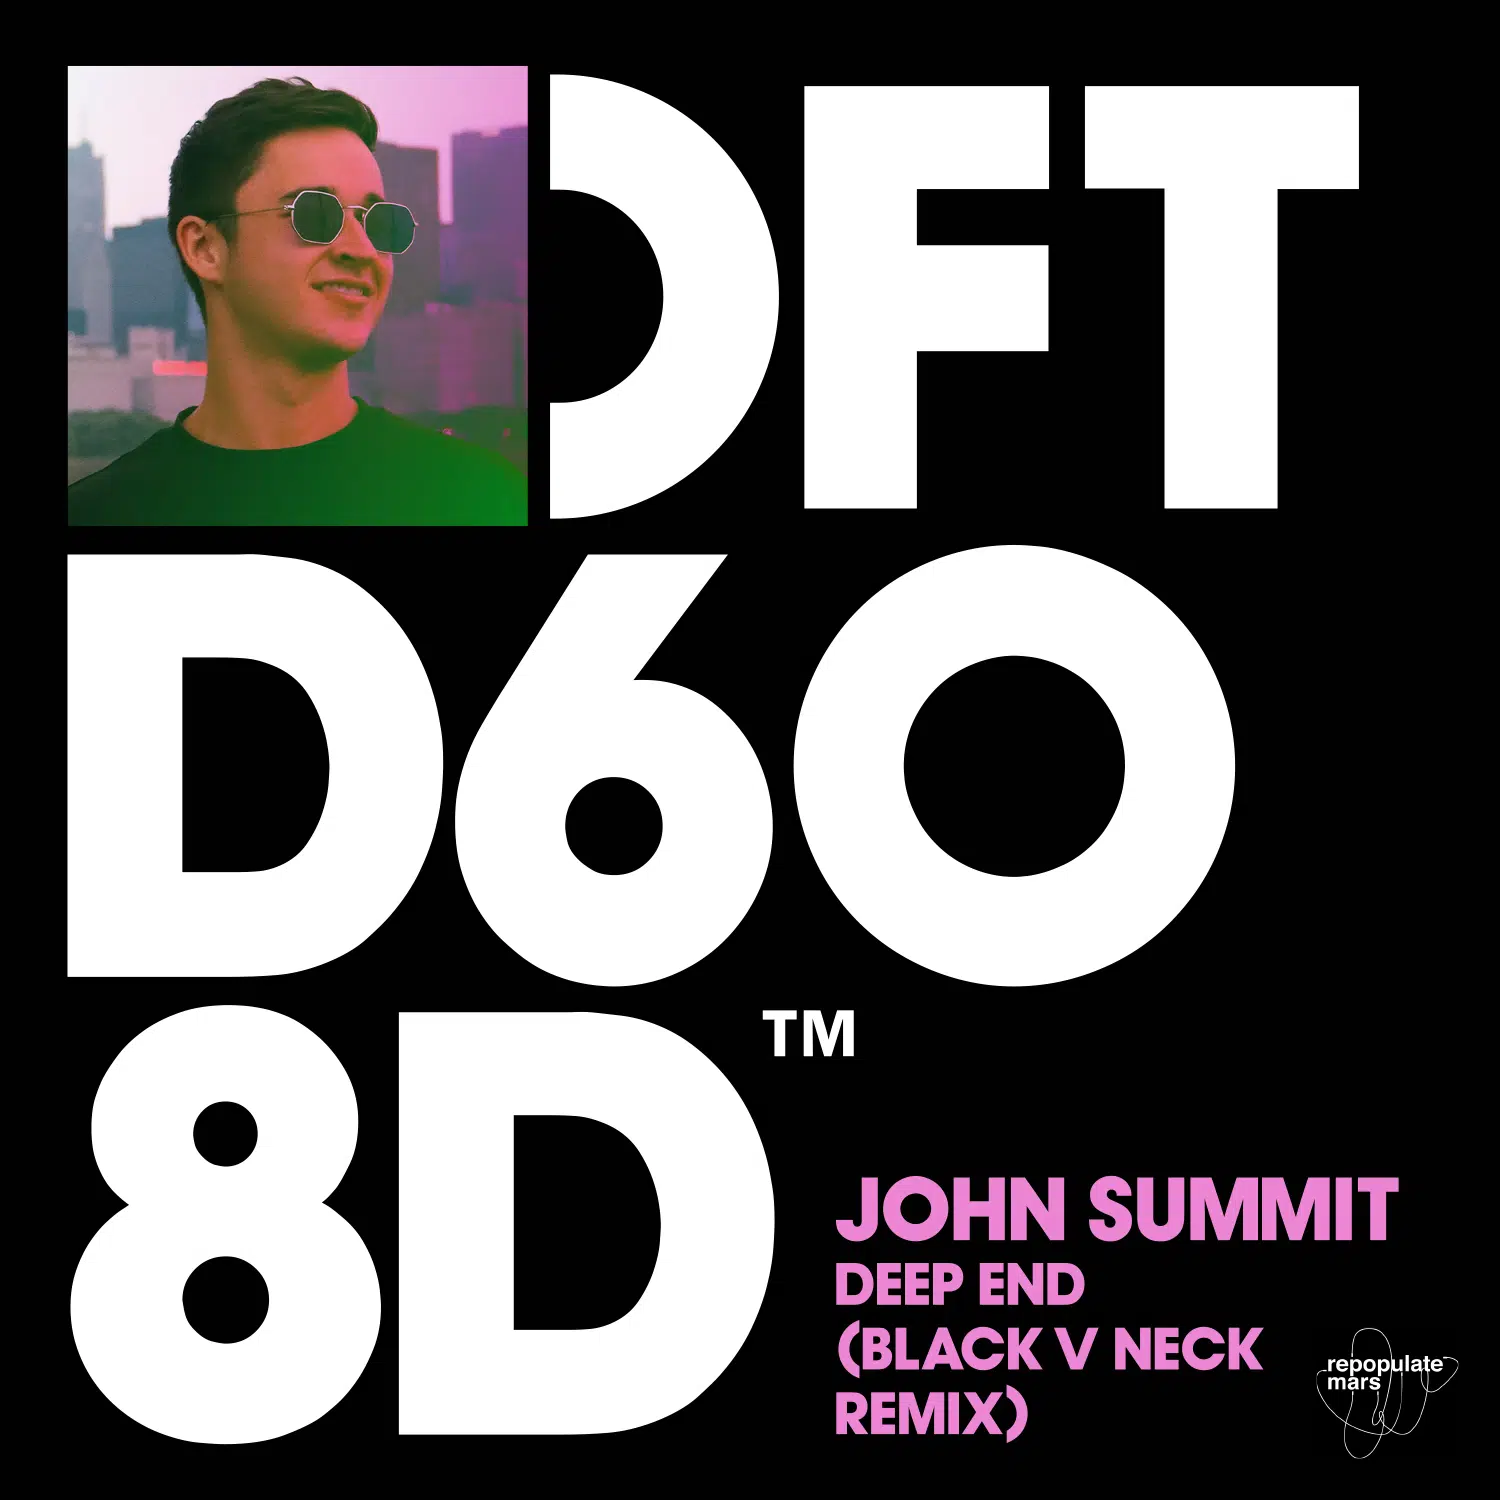 Black V Neck Remix of John Summit “Deep End”